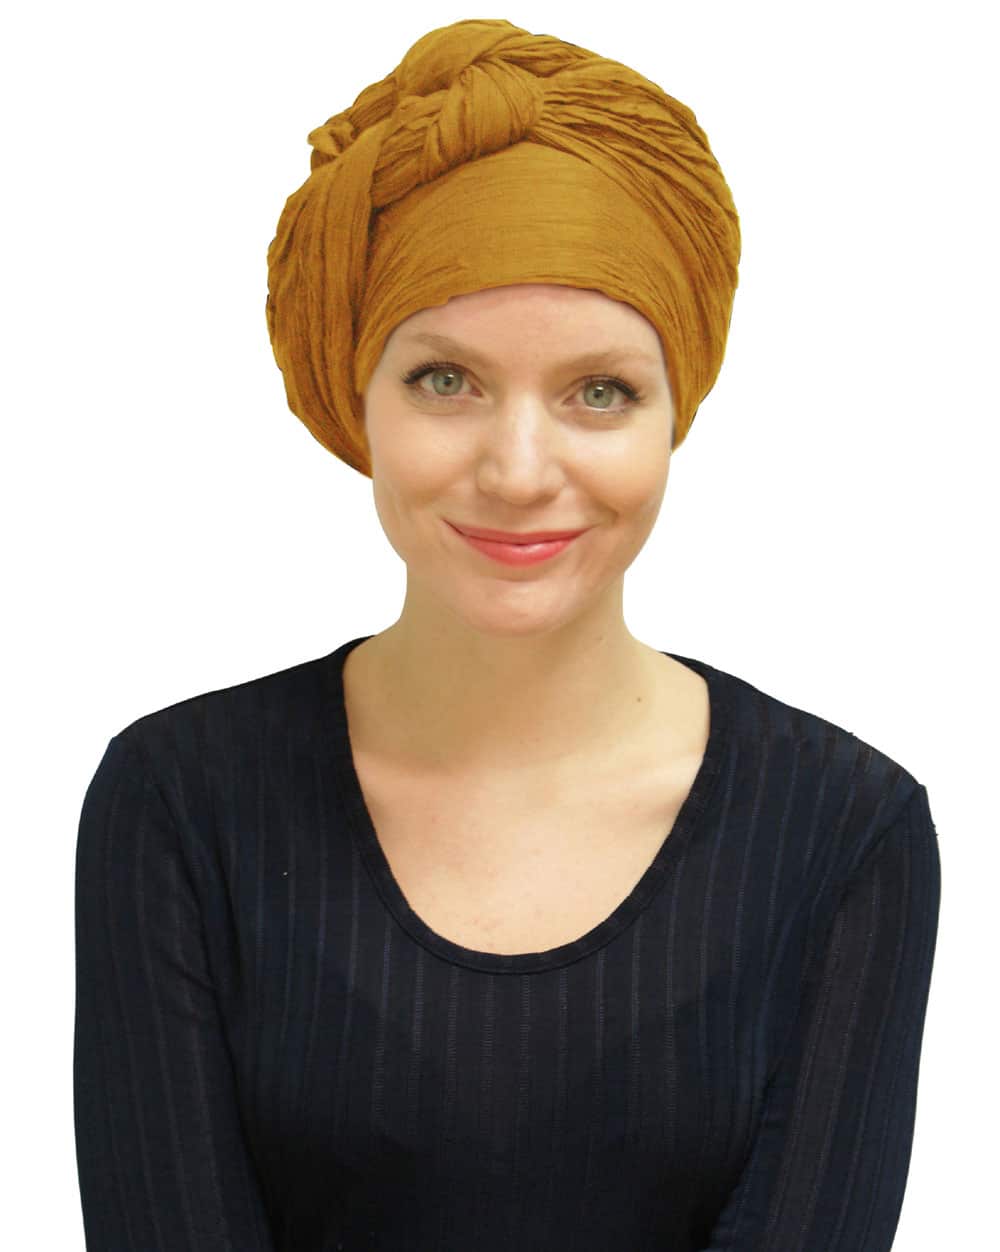 woman wearing head scarf as a turban